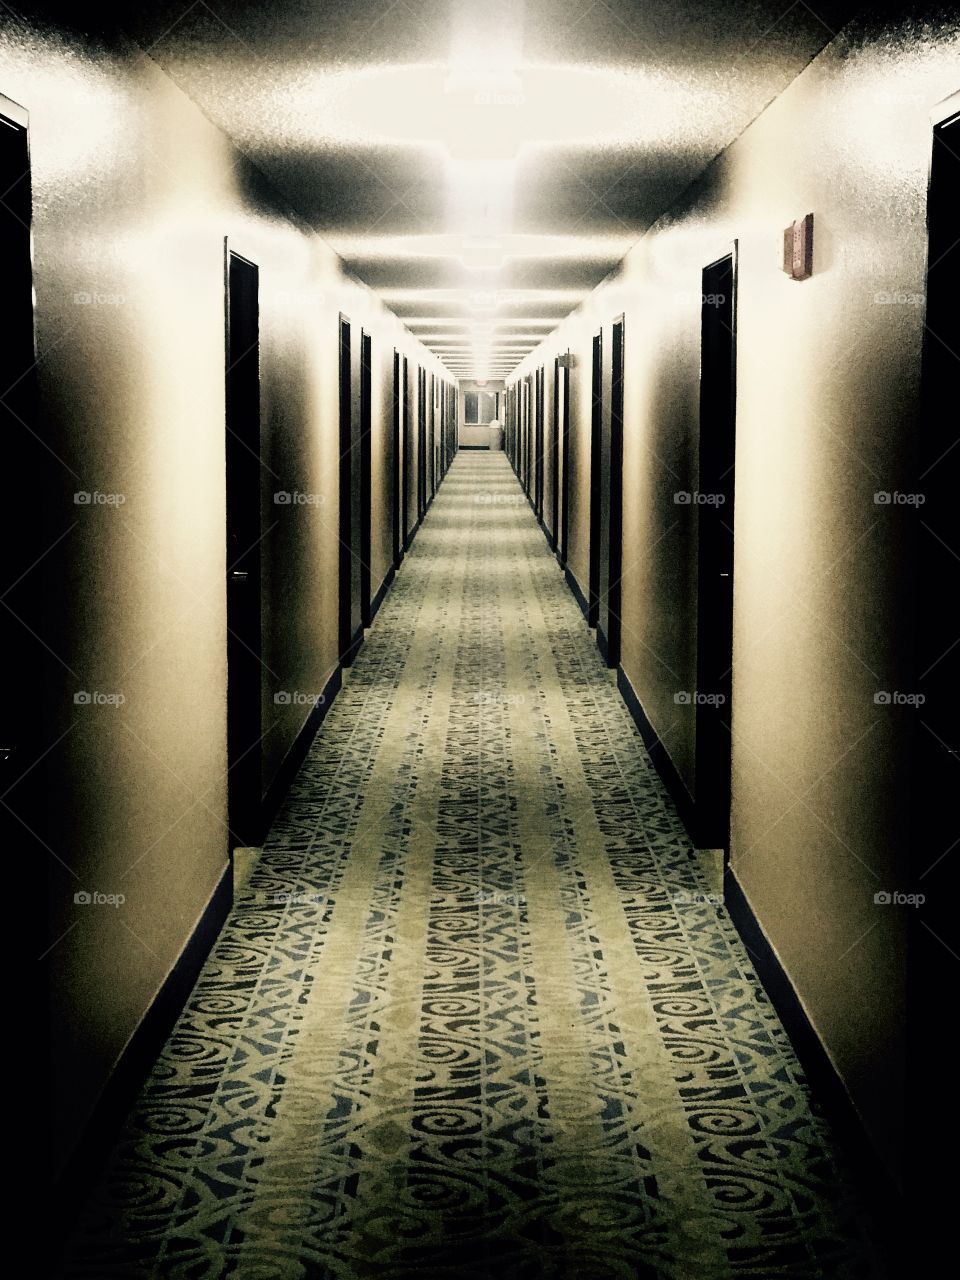 Hallway vibes 😎